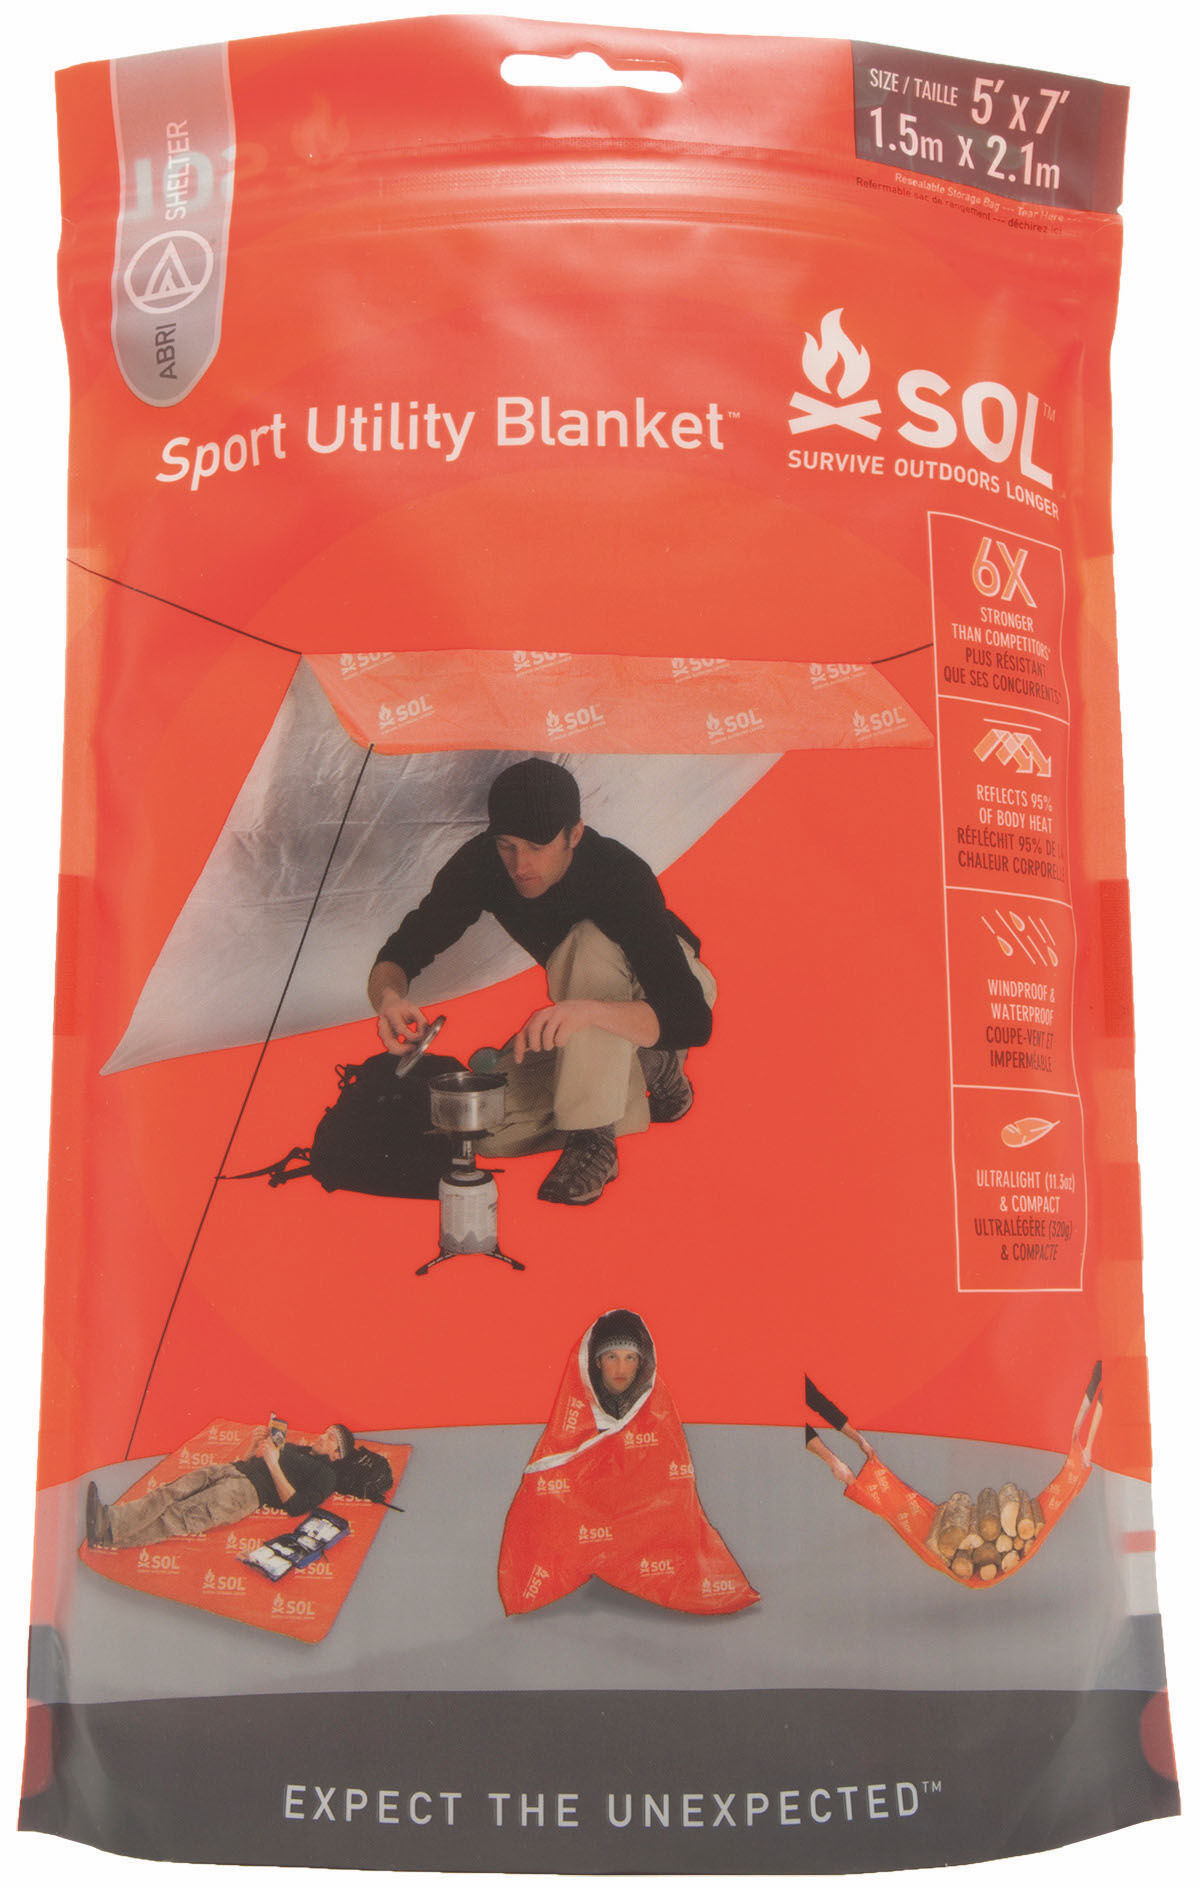 Sol Sport Utility Blanket - Rescue blanket